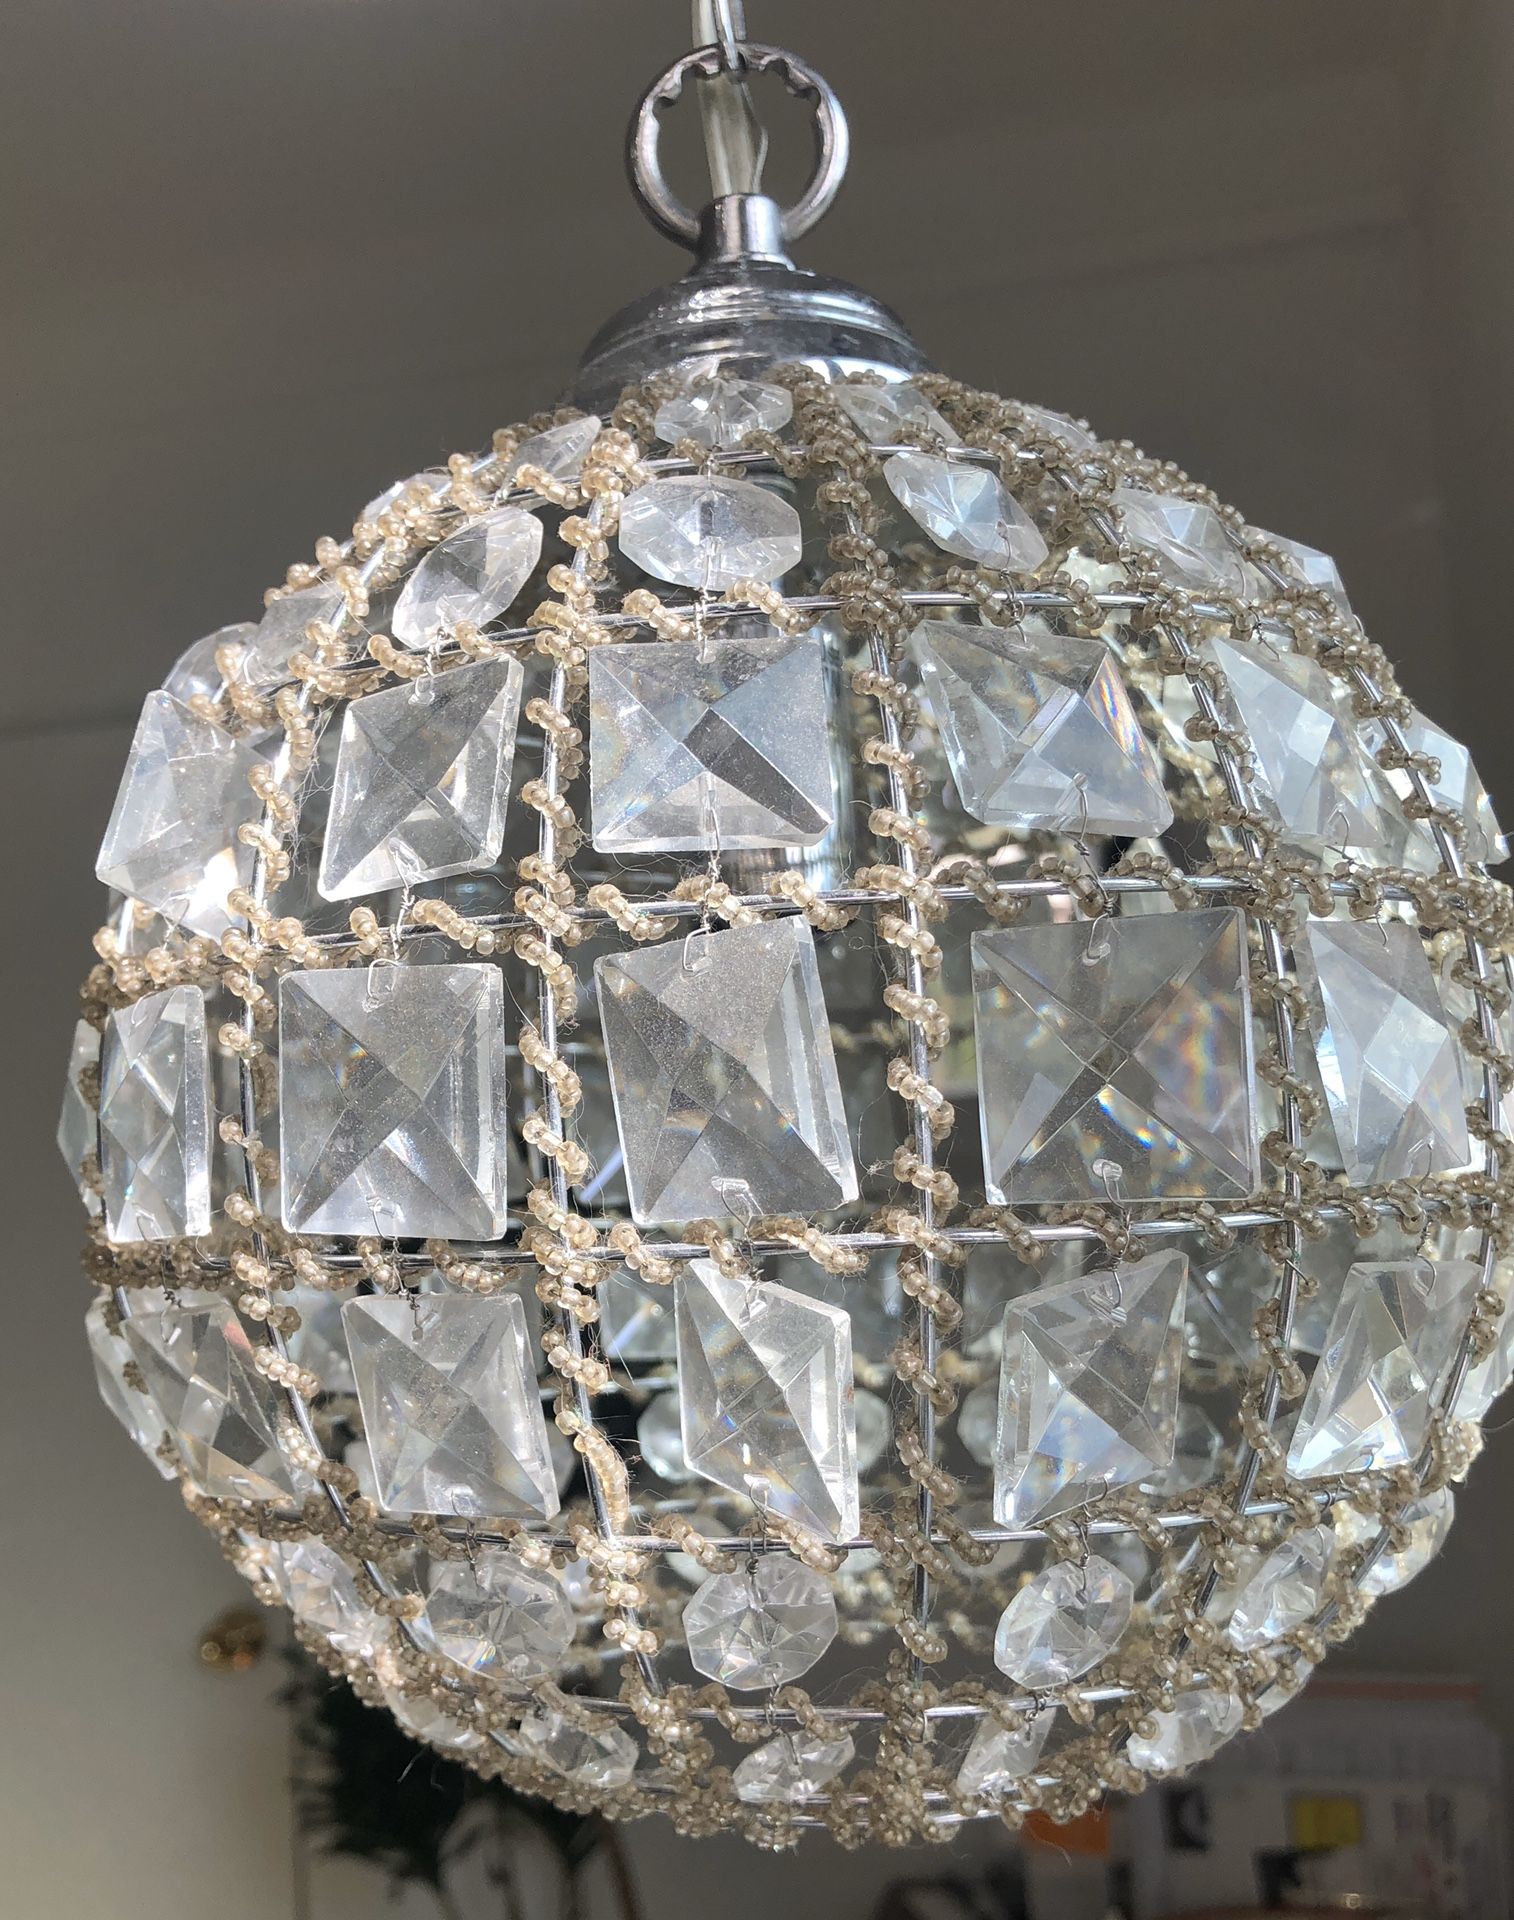 Crystal globe pendant lamp light